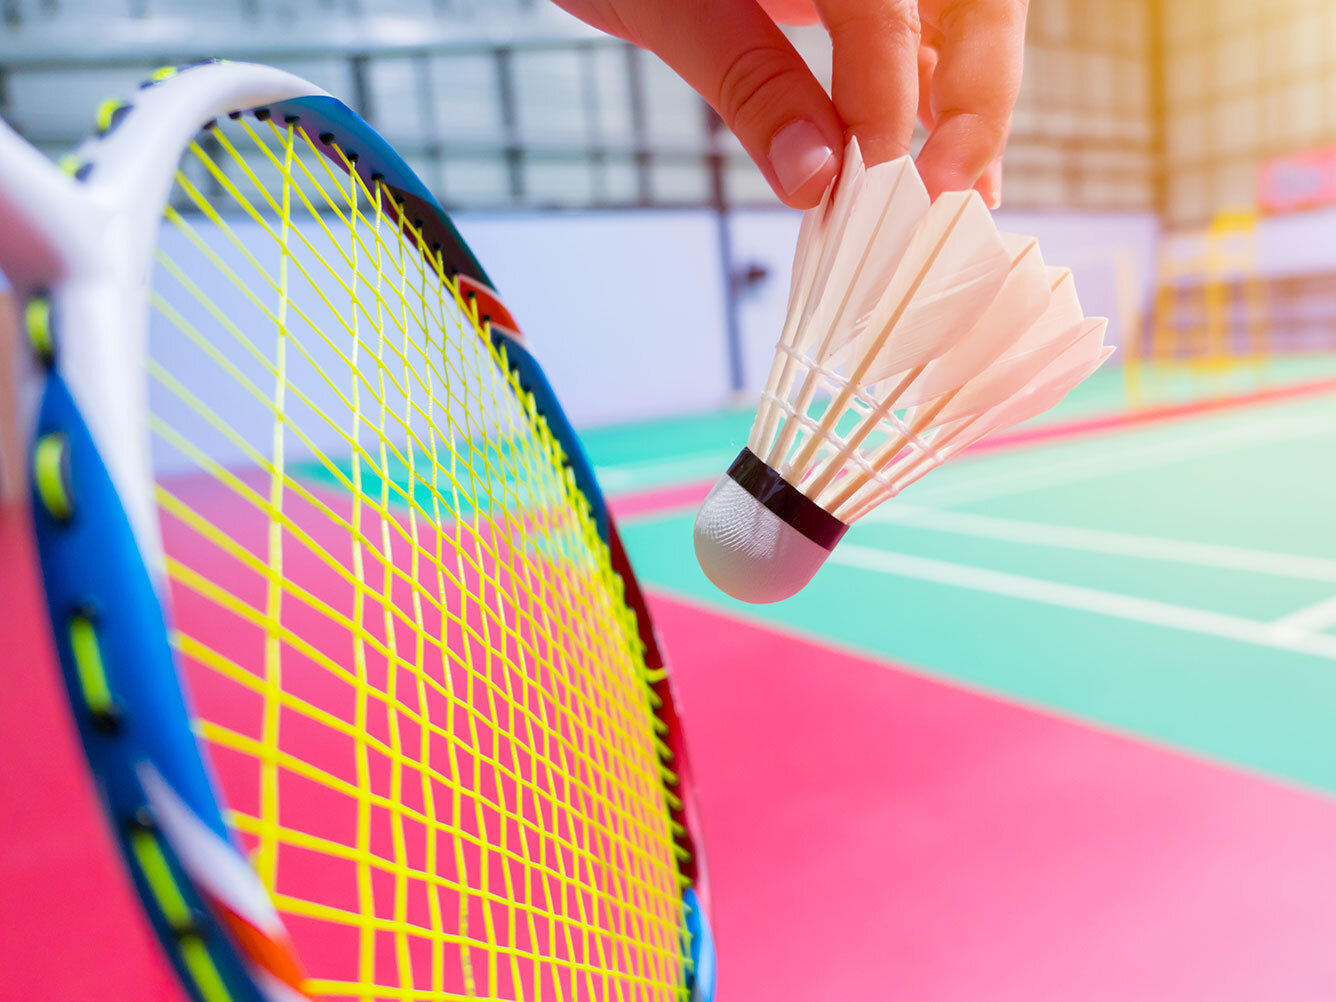 parks-activation-badminton-volleyball-sports-2019-4x3-v1.jpg